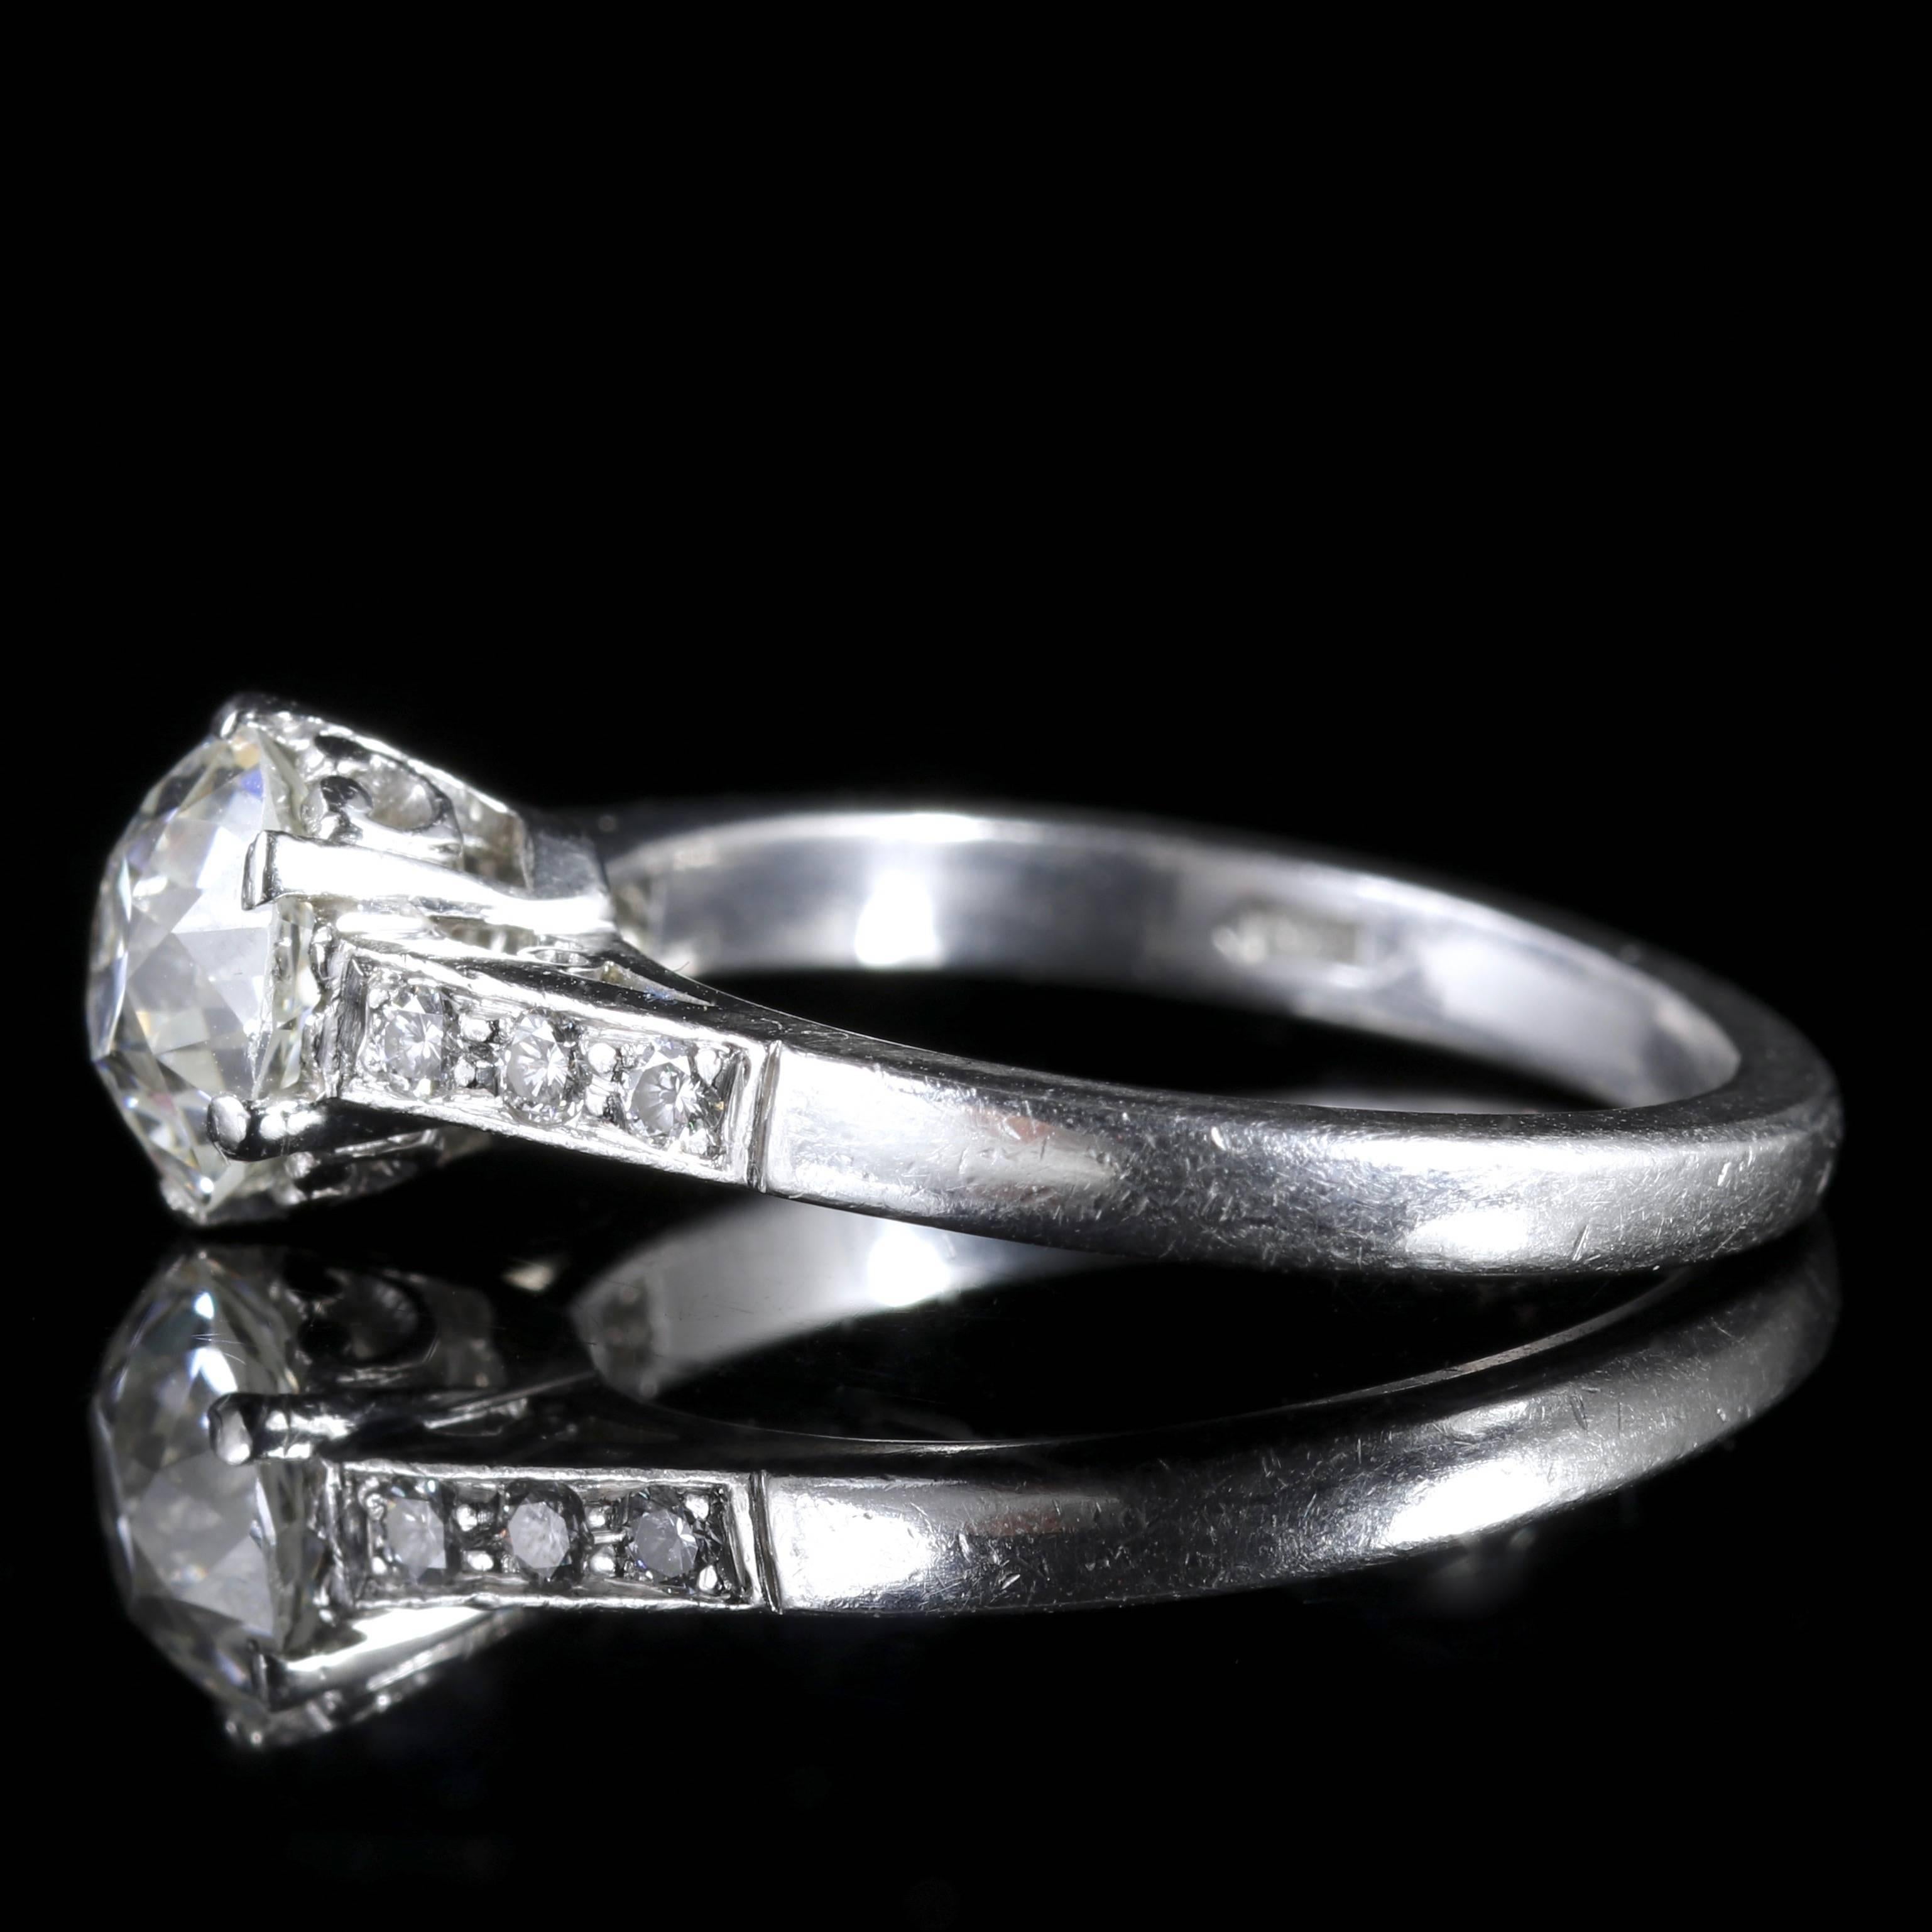 Antique Edwardian Platinum 1.58 Carat Solitaire Diamond Ring, circa 1915 In Excellent Condition For Sale In Lancaster, Lancashire